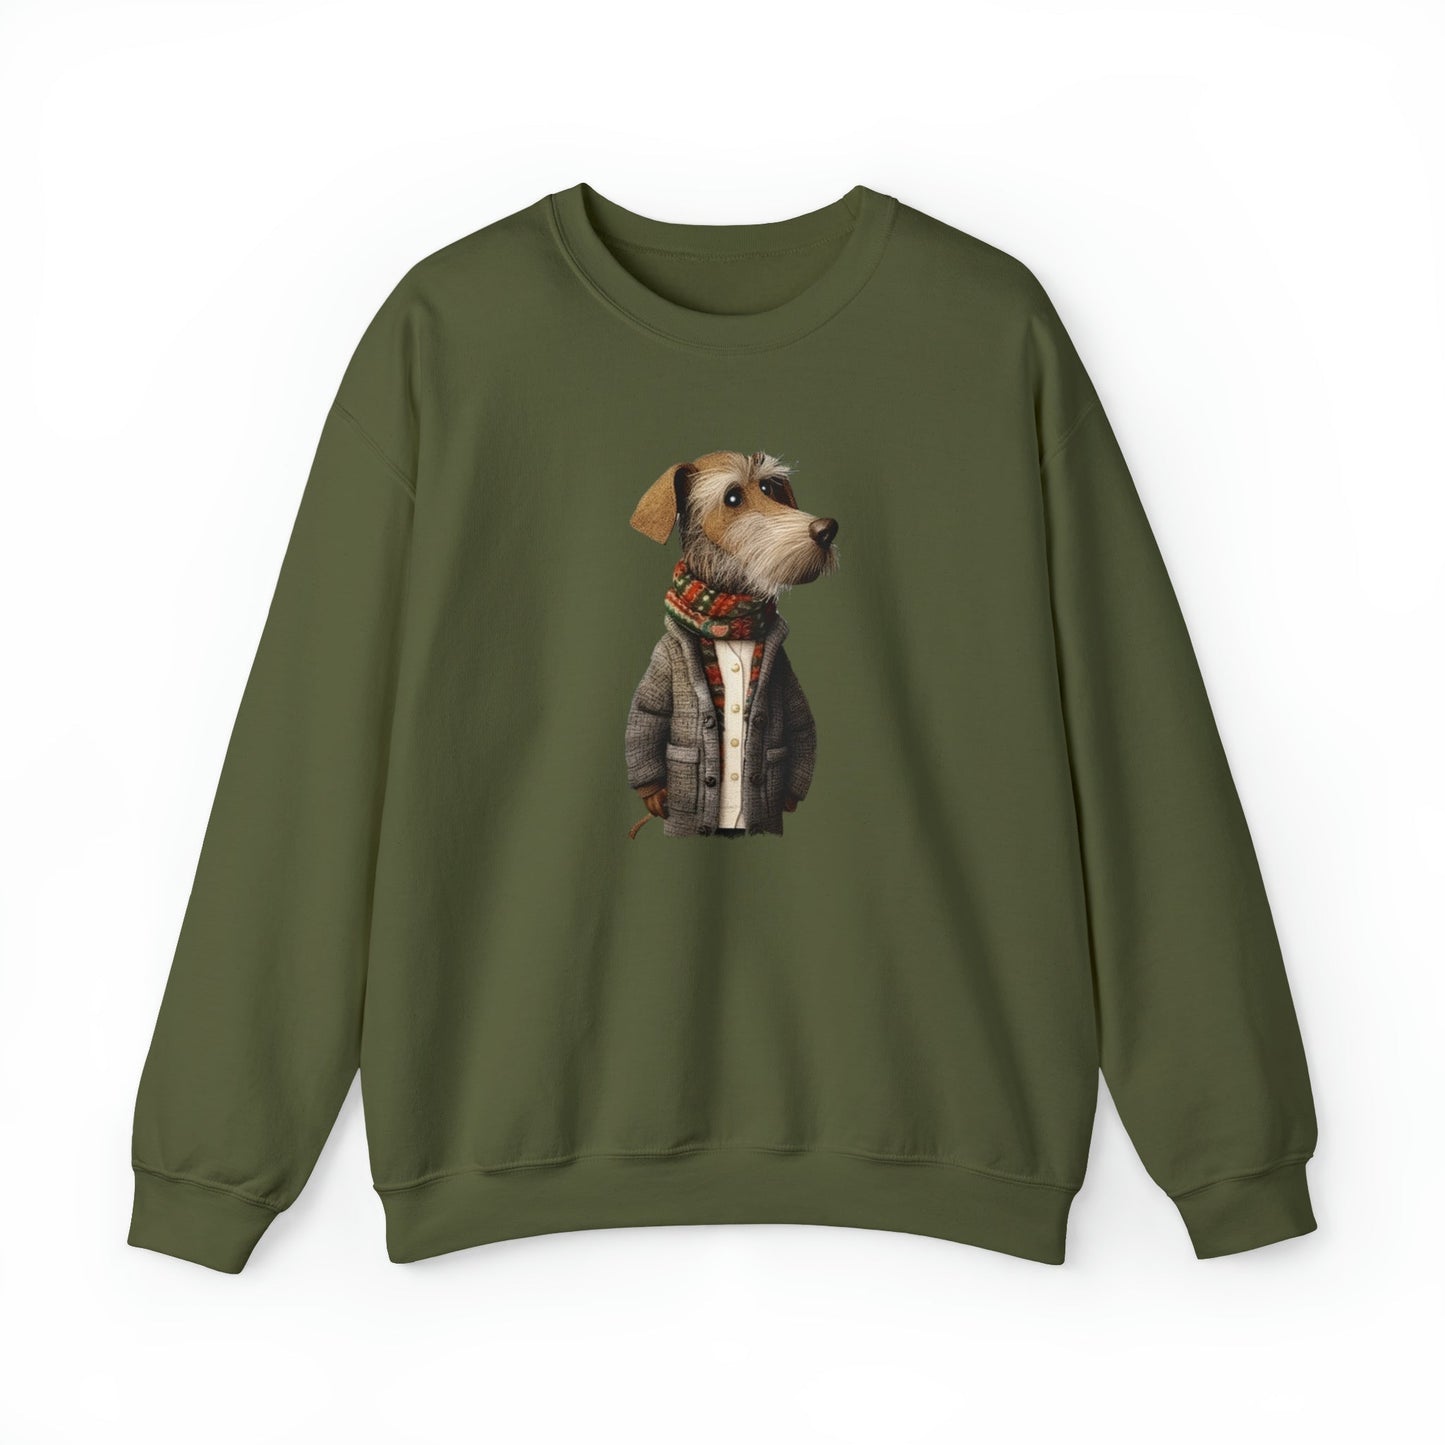 Terrier Dog Sweatshirt, Dogs in Sweaters Art Collection, Unique Boho Design Shirt - FlooredByArt